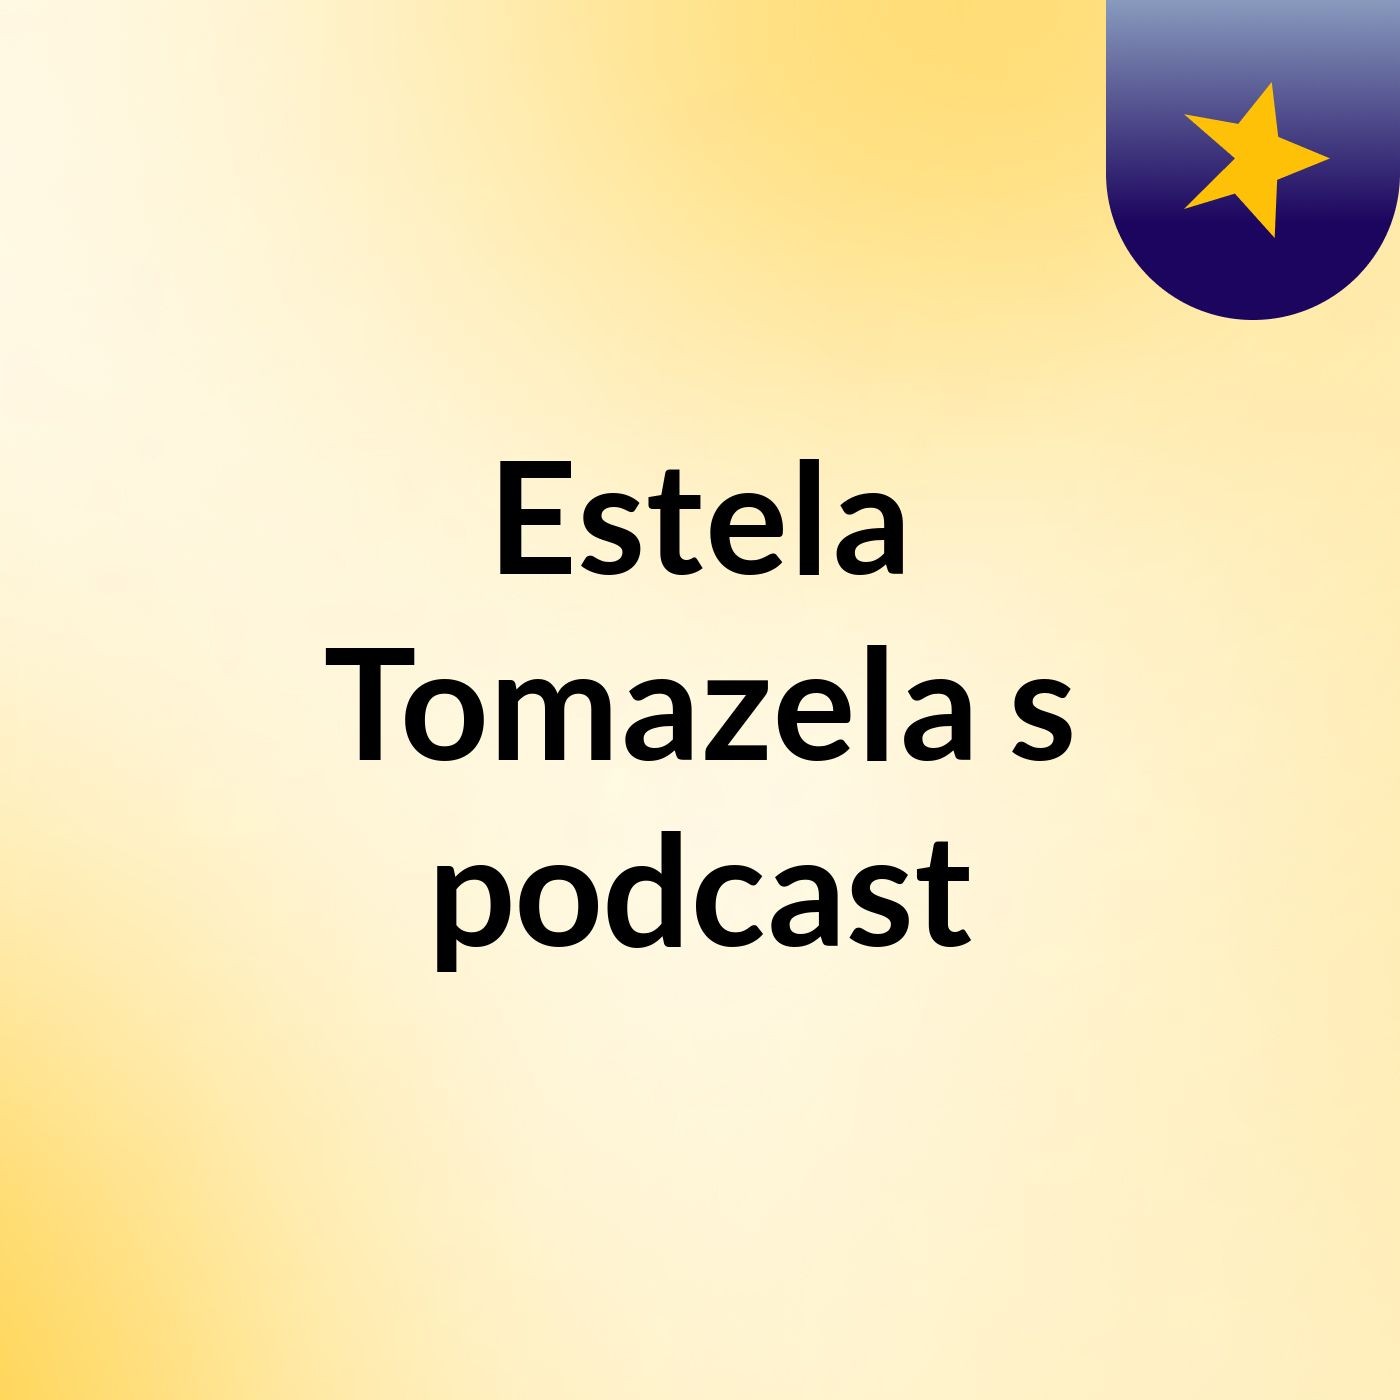 Estela Tomazela's podcast